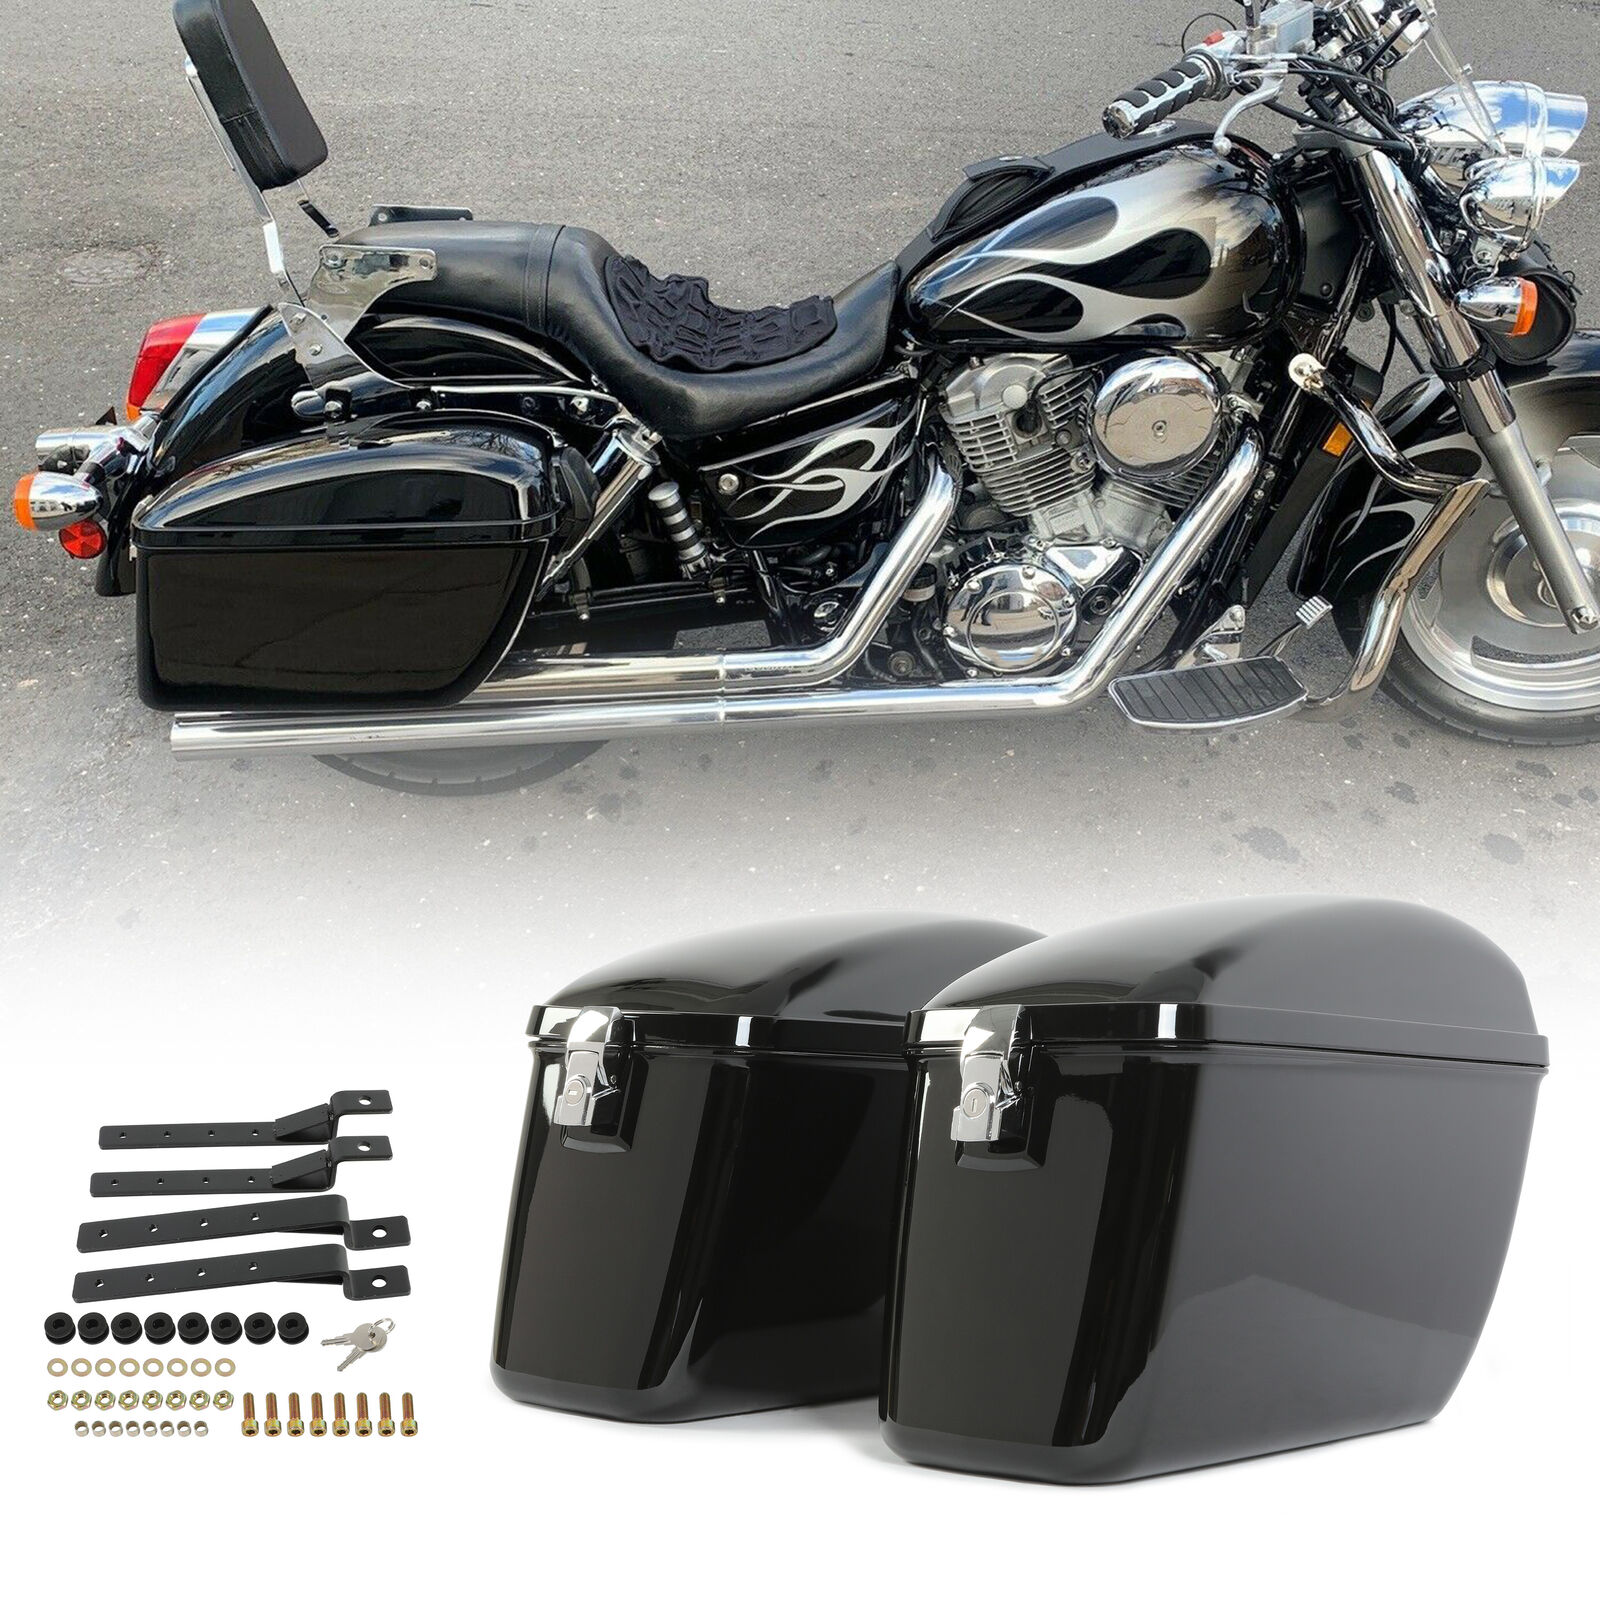 Universal Luggage Motorcycle Hard SaddleBag For Harley Glide Sportster XL Honda